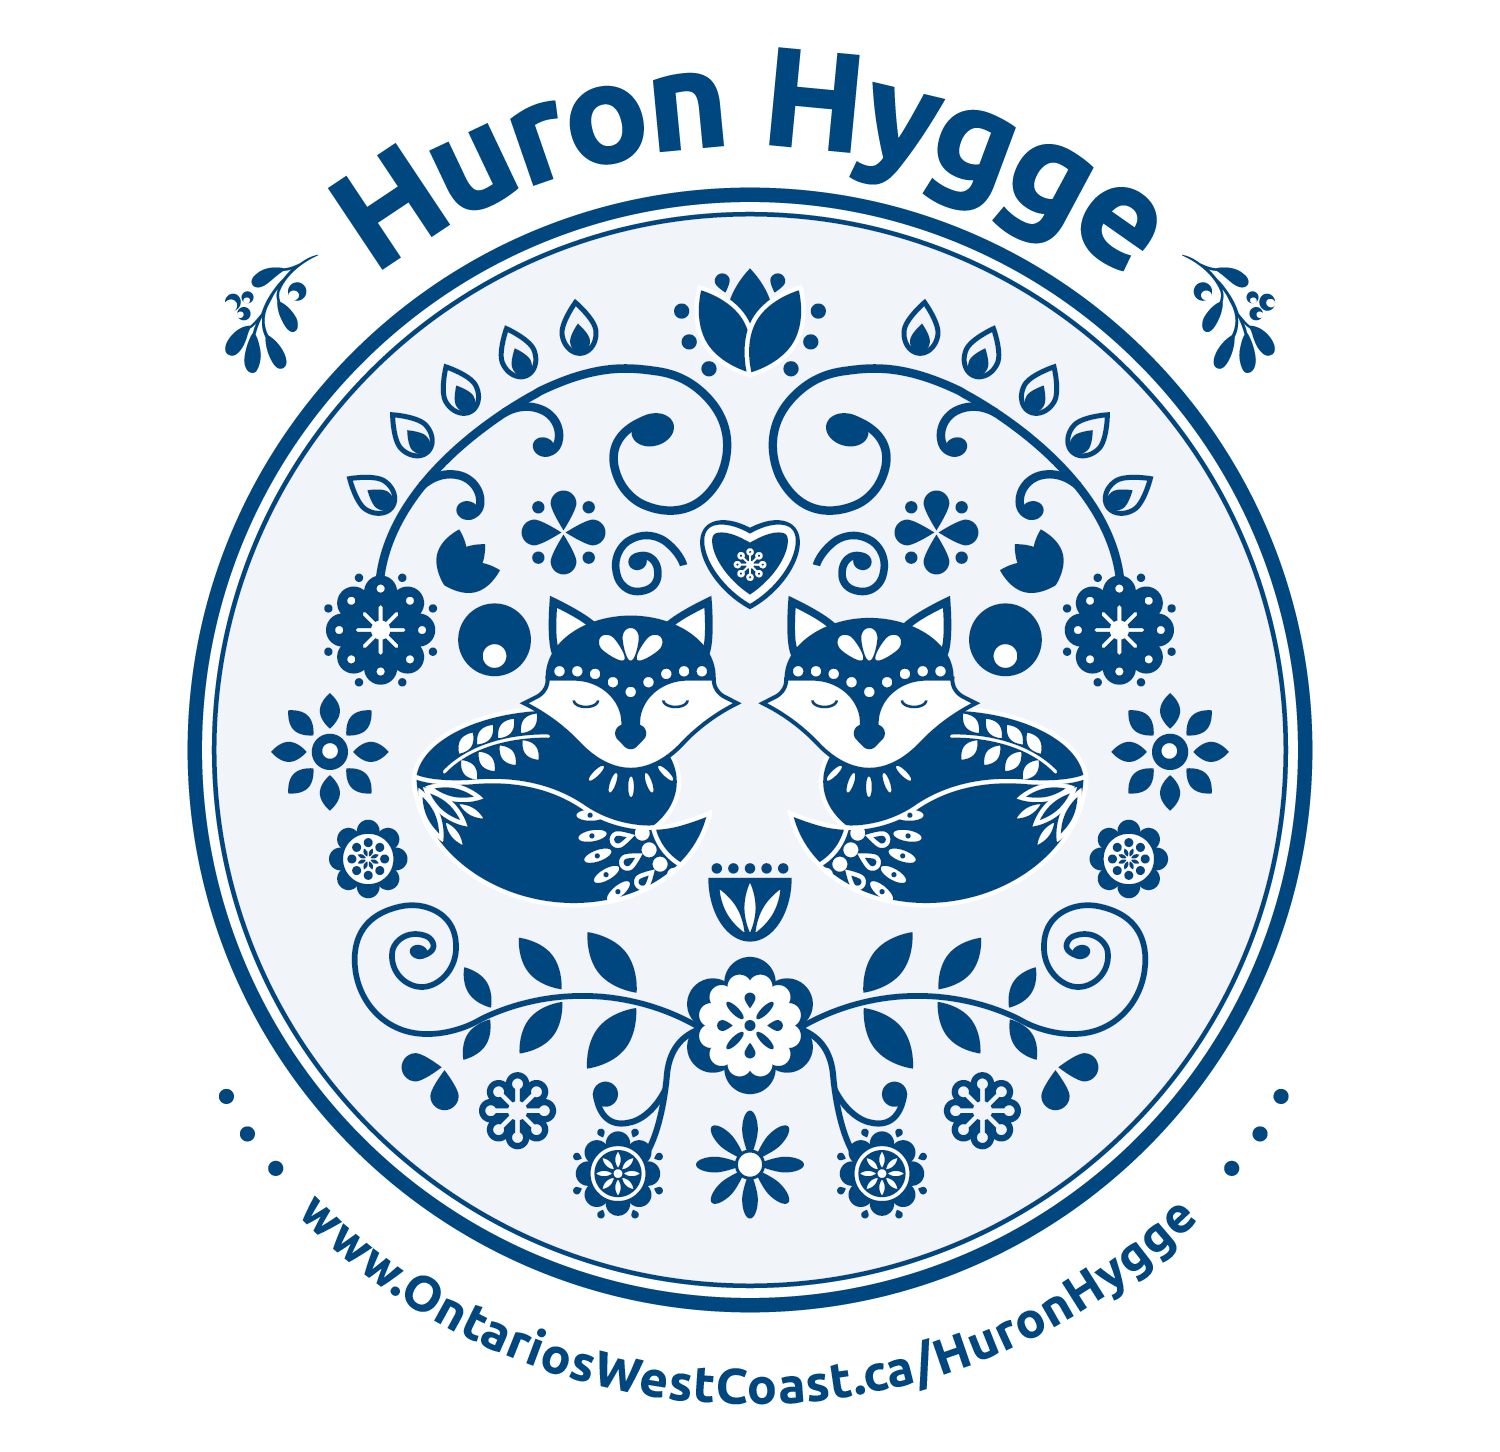 huron county wins national marketing award